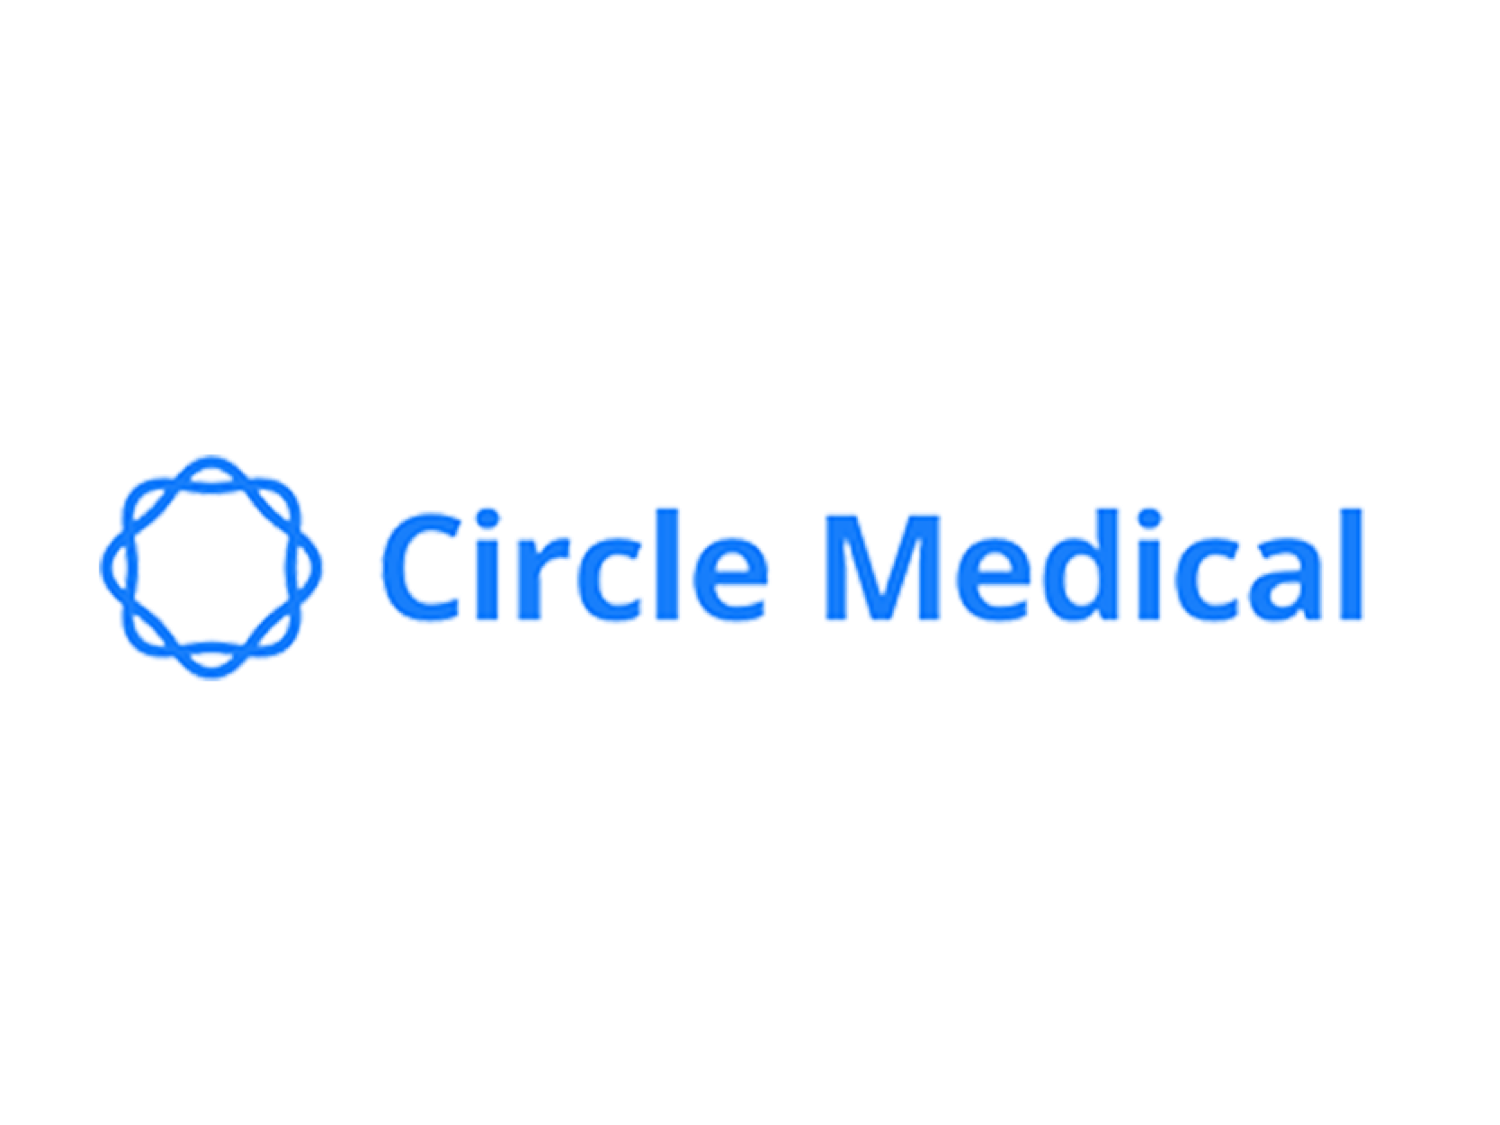 Circle Medical